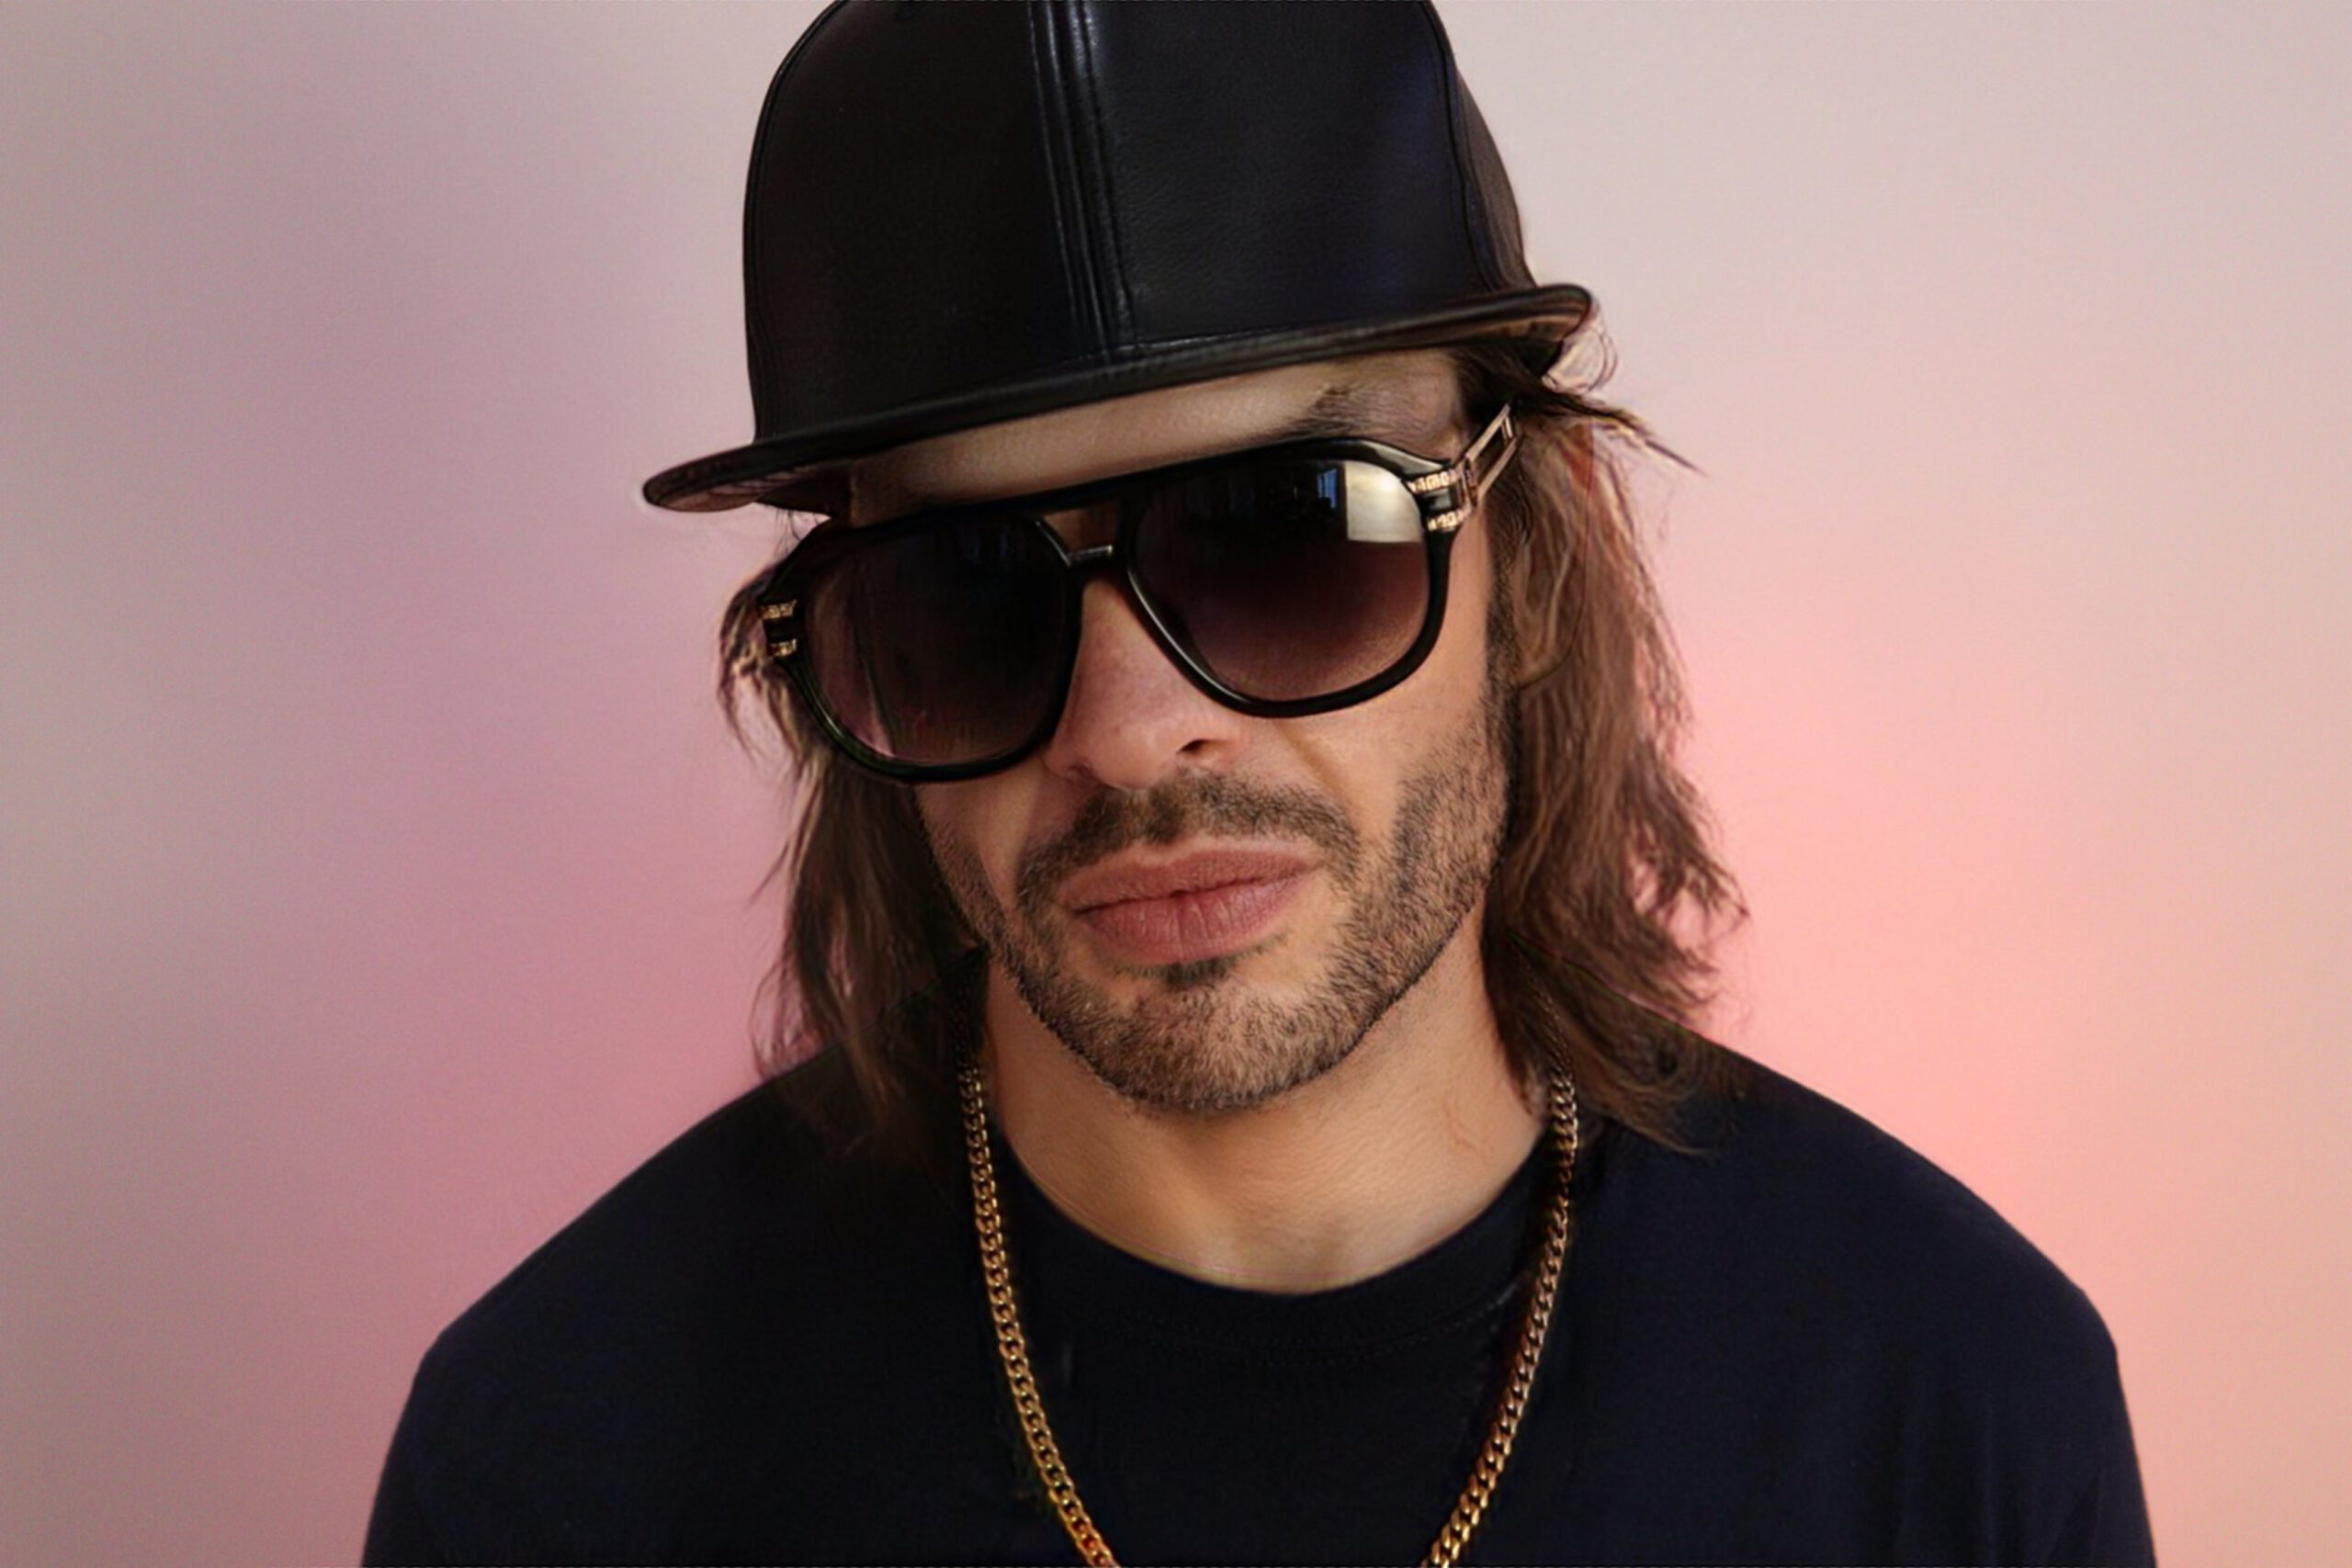 male artist starkillers dj wearing glasses black hat zilliqa